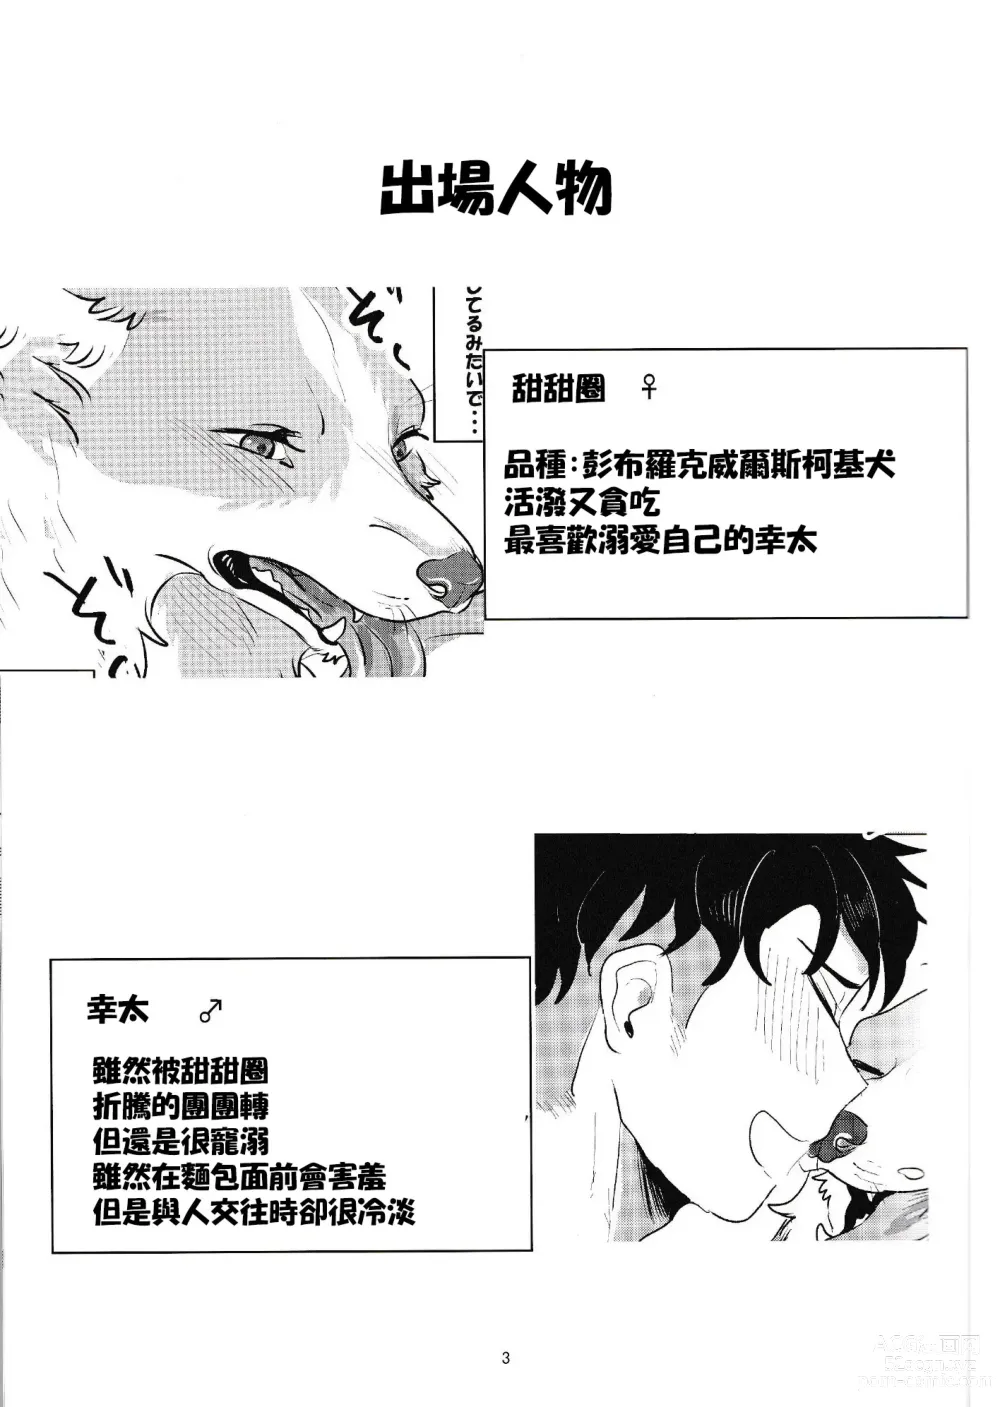 Page 2 of doujinshi 魅惑のパン